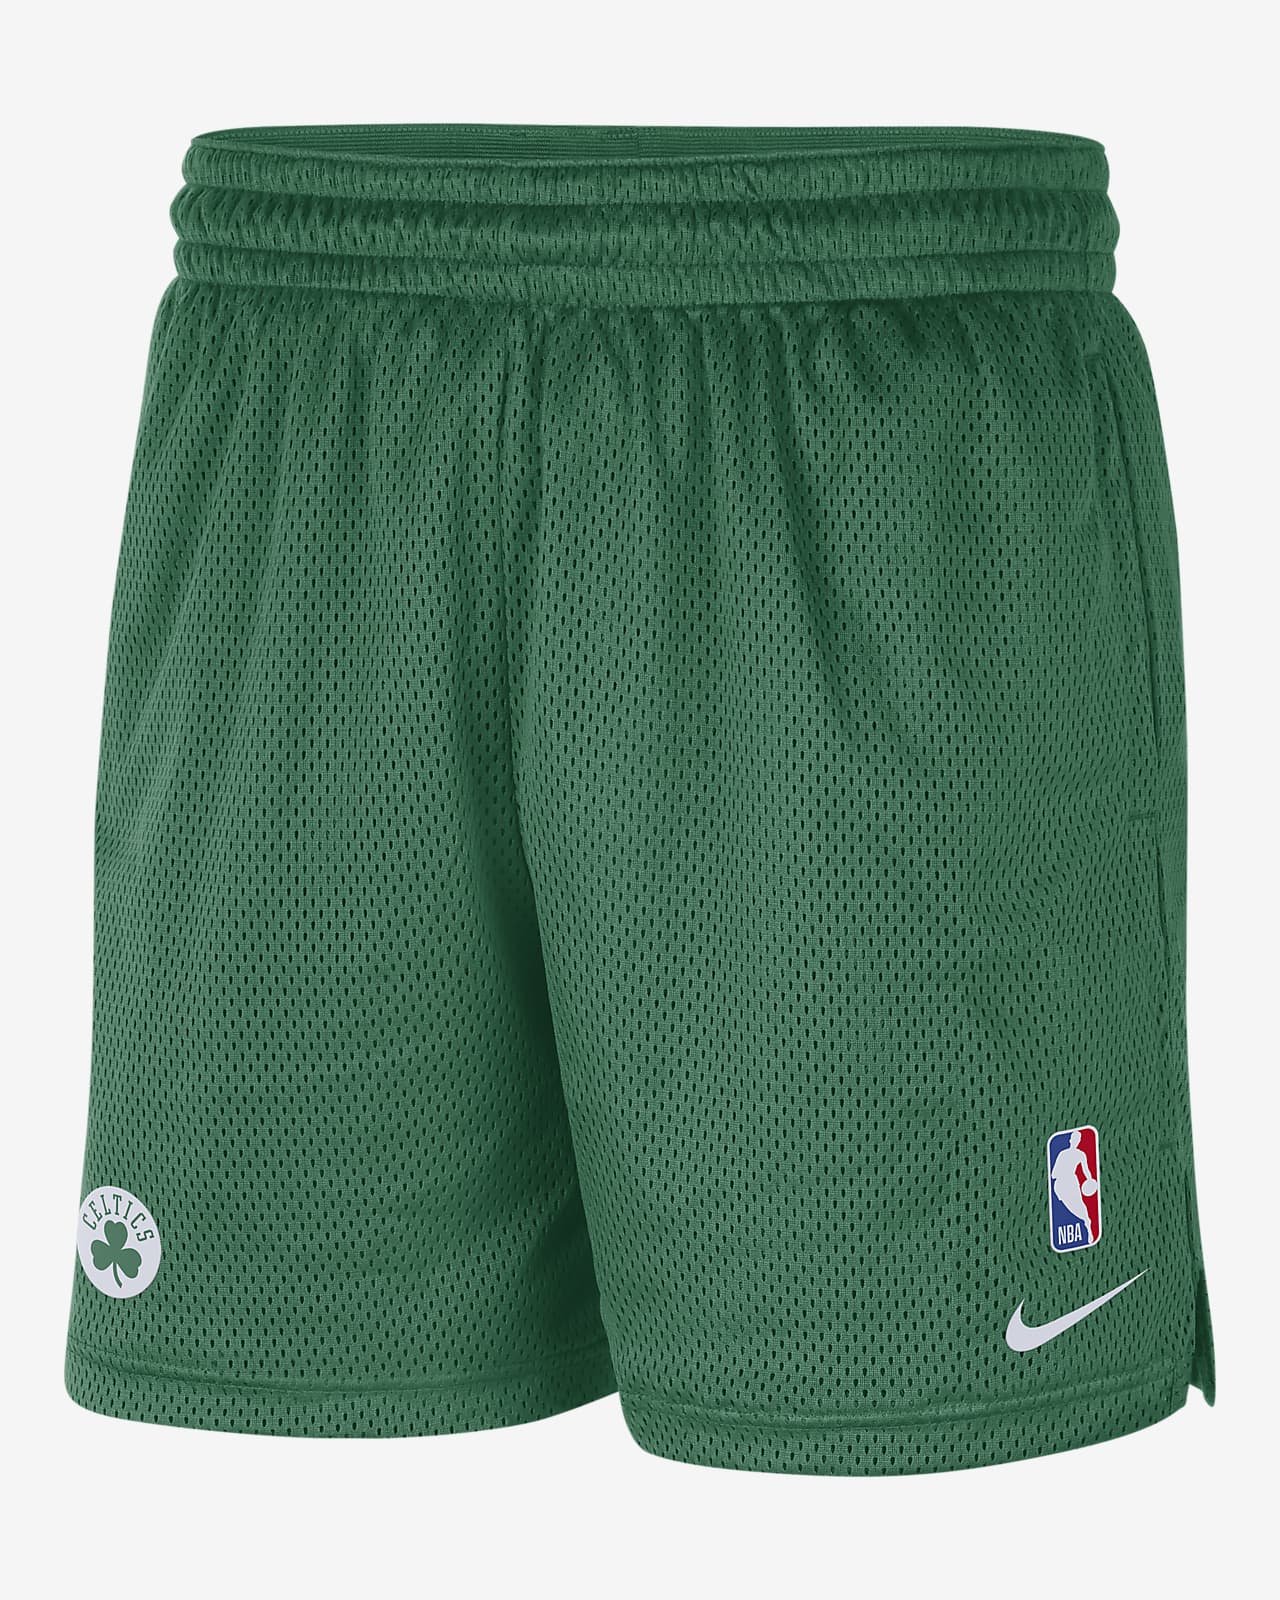 Shorts Nike NBA para hombre Boston Celtics